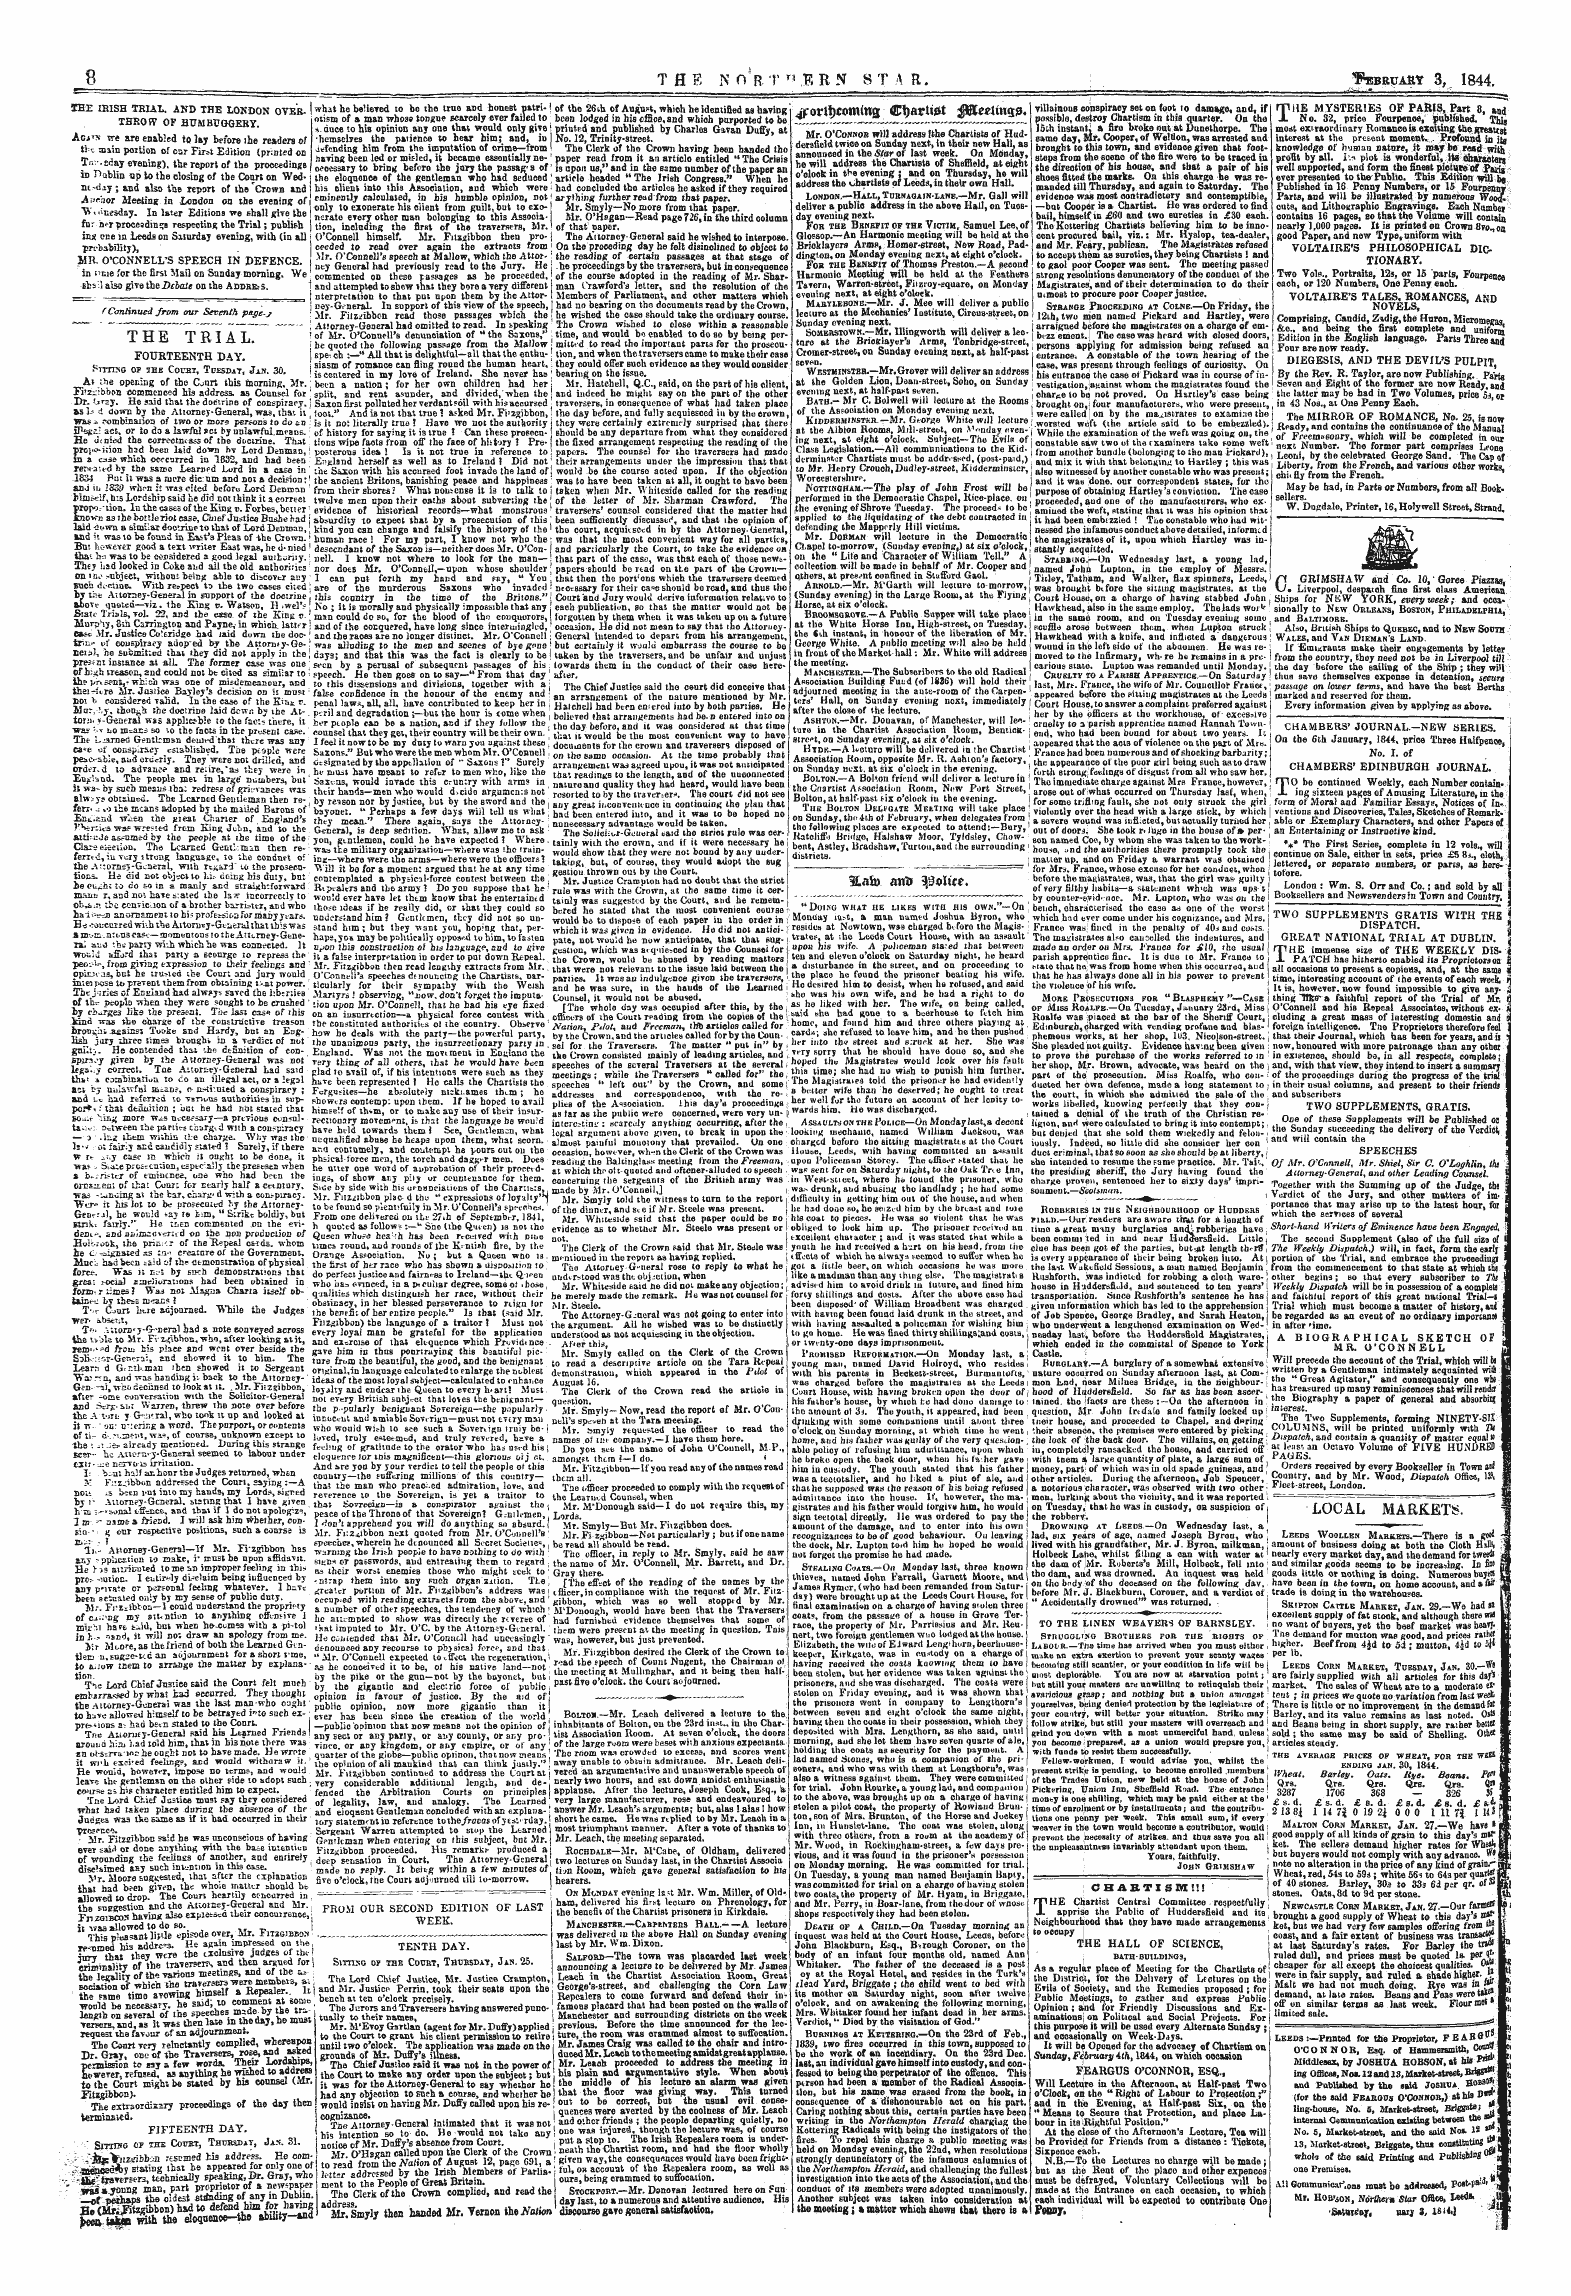 Northern Star (1837-1852): jS F Y, 1st edition - 3lafo Auto 3^Olu*.